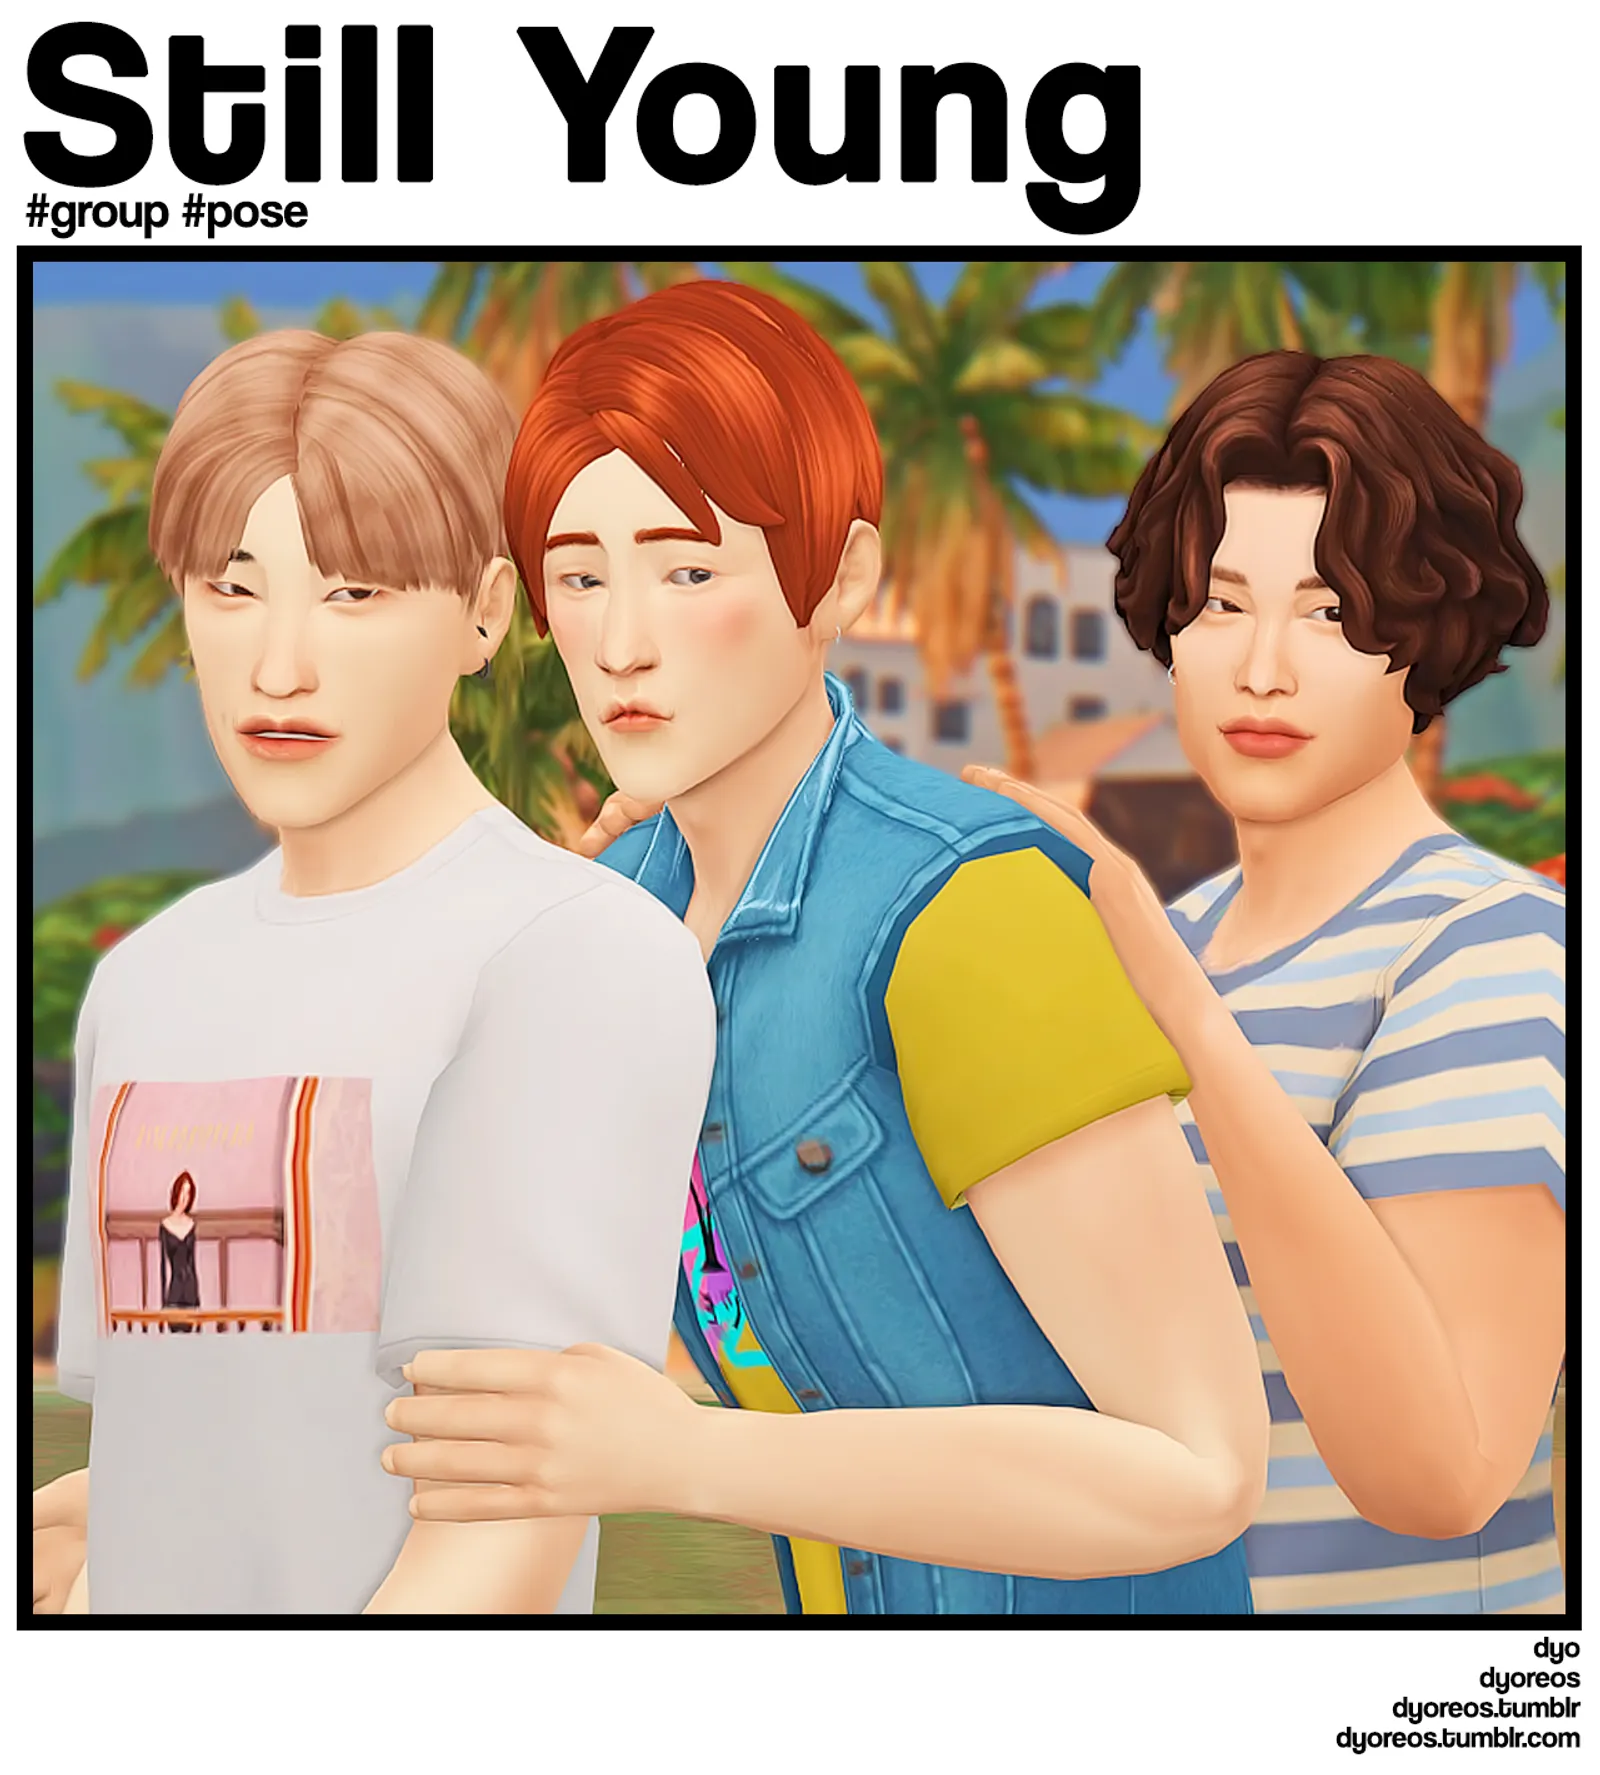 [Dyoreos] Still Young Group Pose